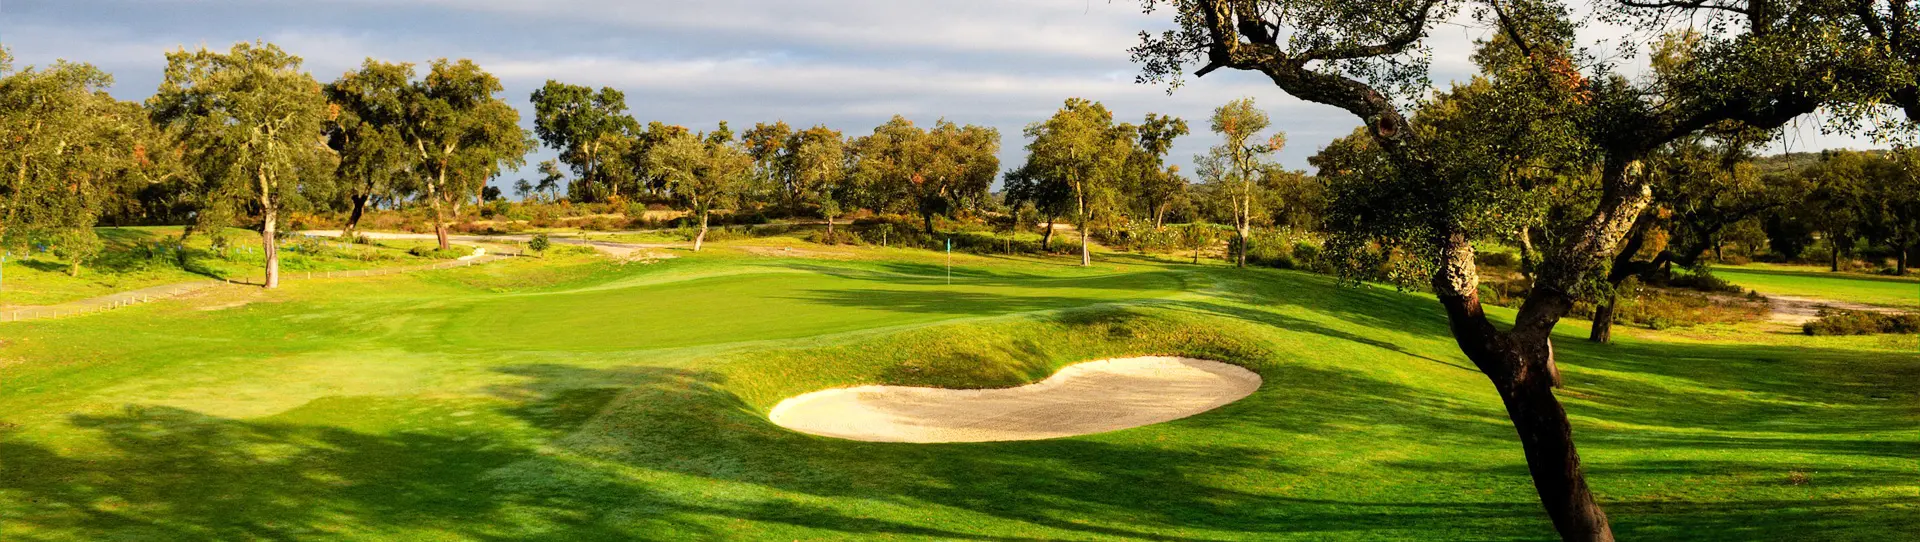 Portugal golf courses - Ribagolfe Oaks Golf Course (ex Riba II) - Photo 1